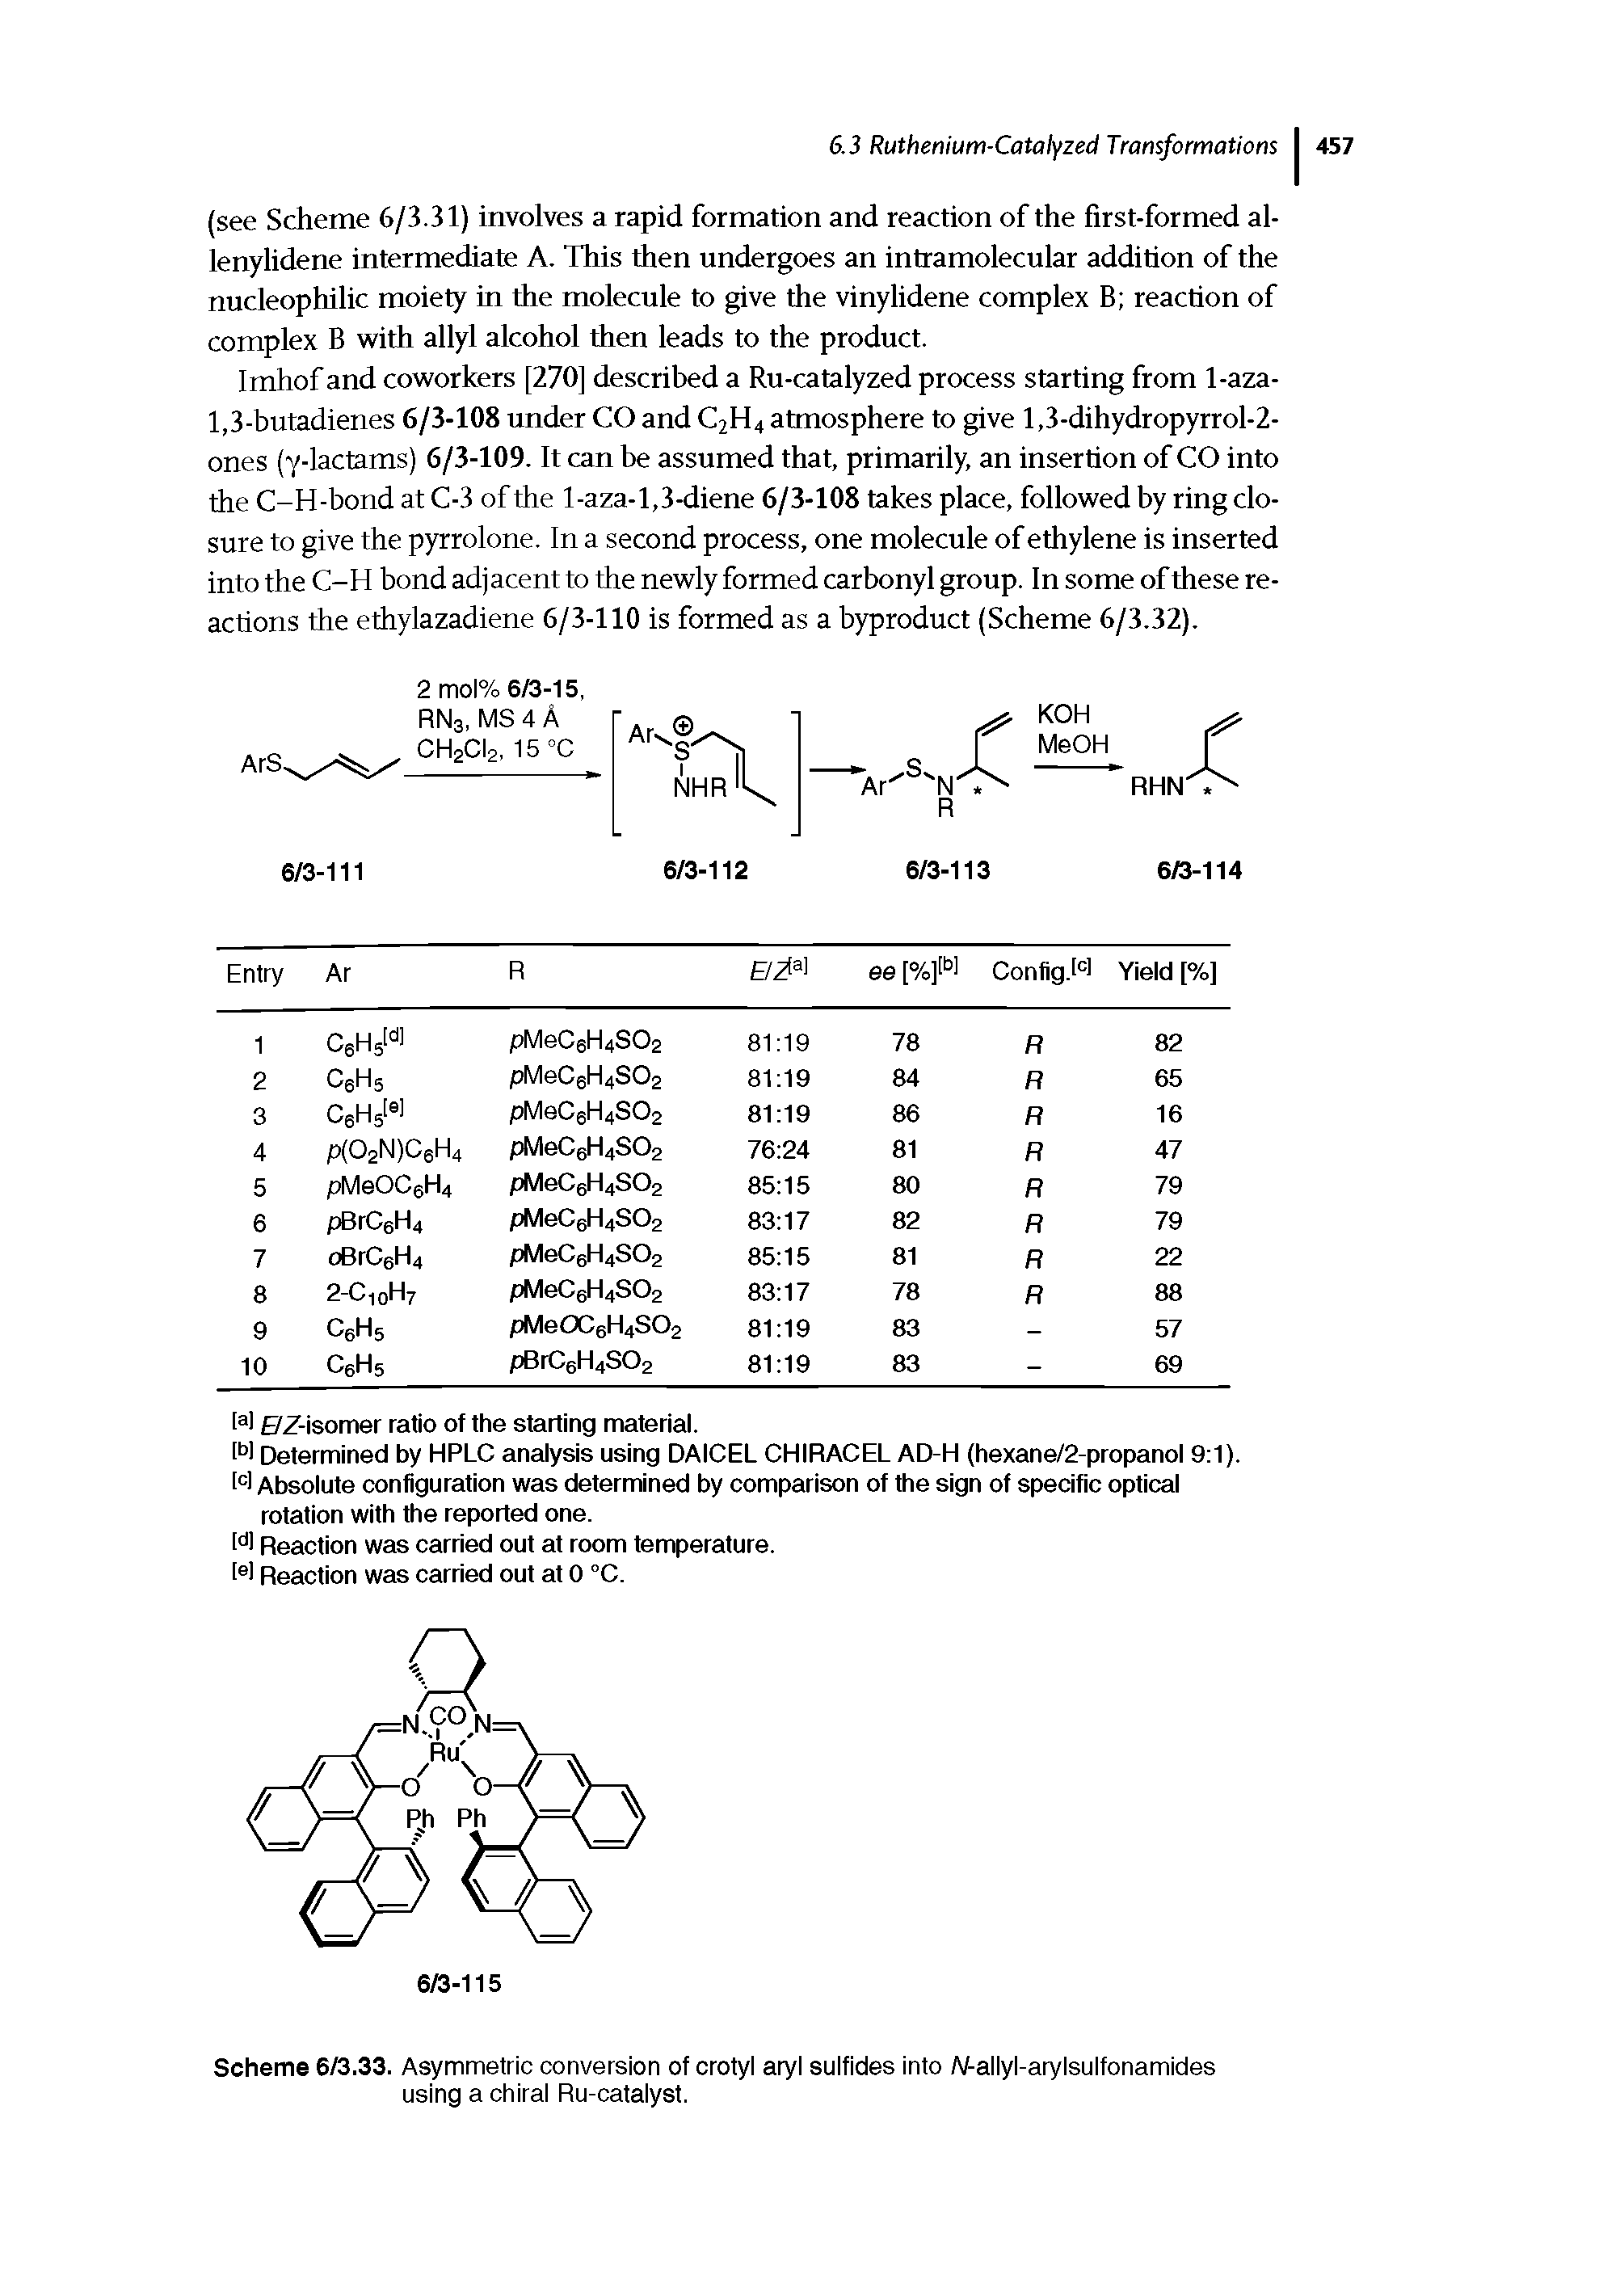 Scheme 6/3.33. Asymmetric conversion of crotyl aryl sulfides into tV-allyl-arylsulfonamides using a chiral Ru-catalyst.